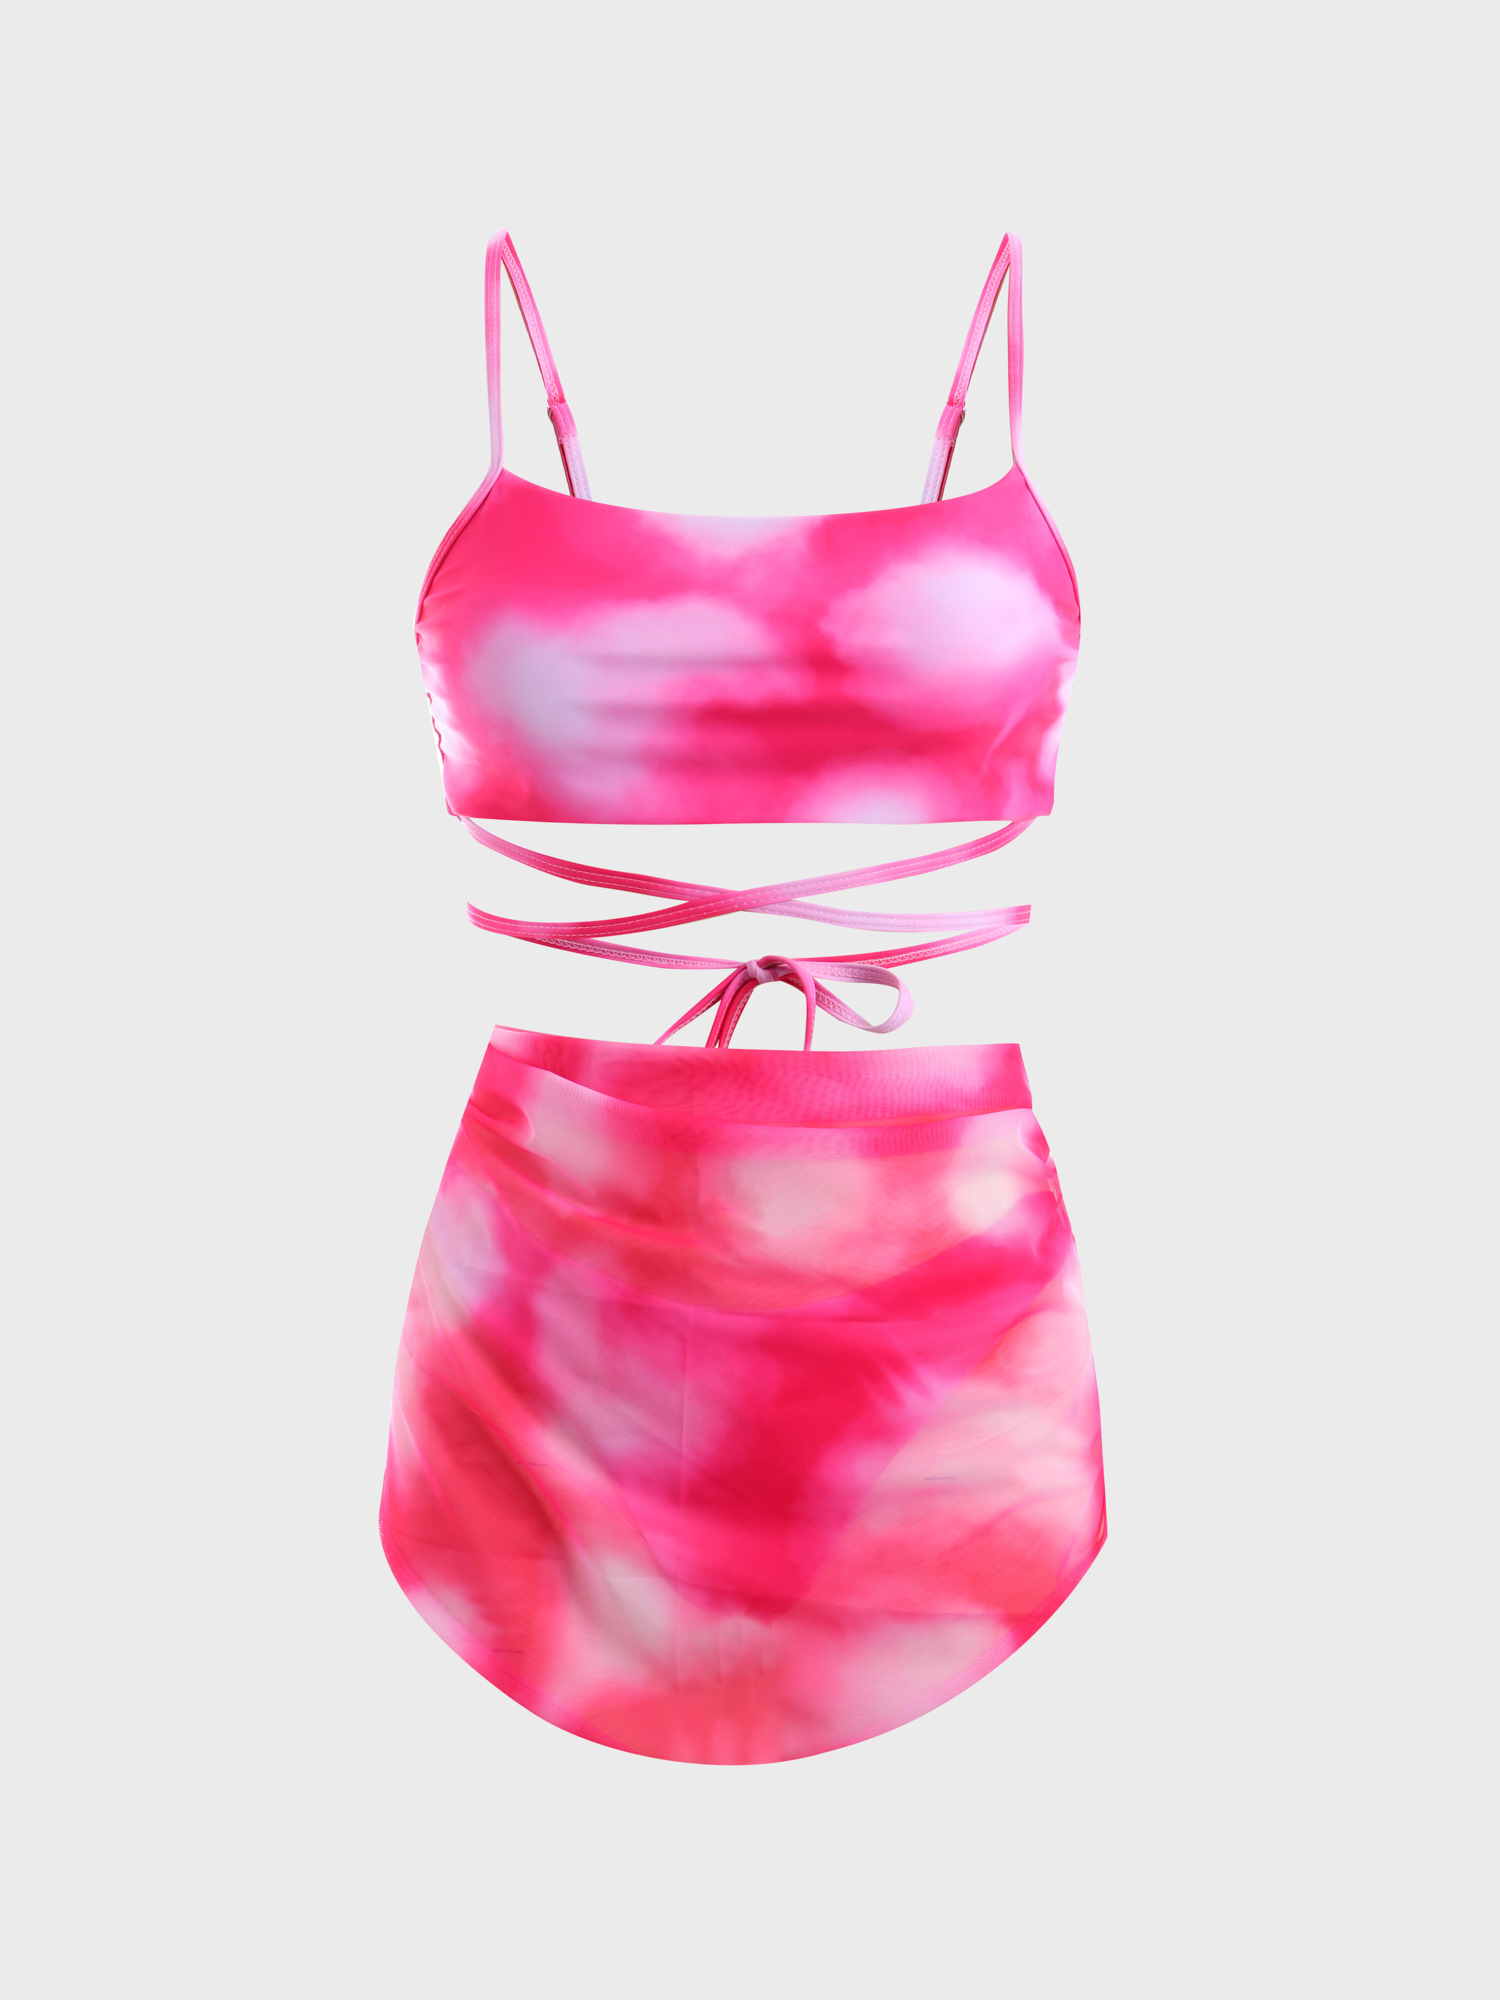 Midsize Vigour Tie-Dye 3-Piece Swimsuit